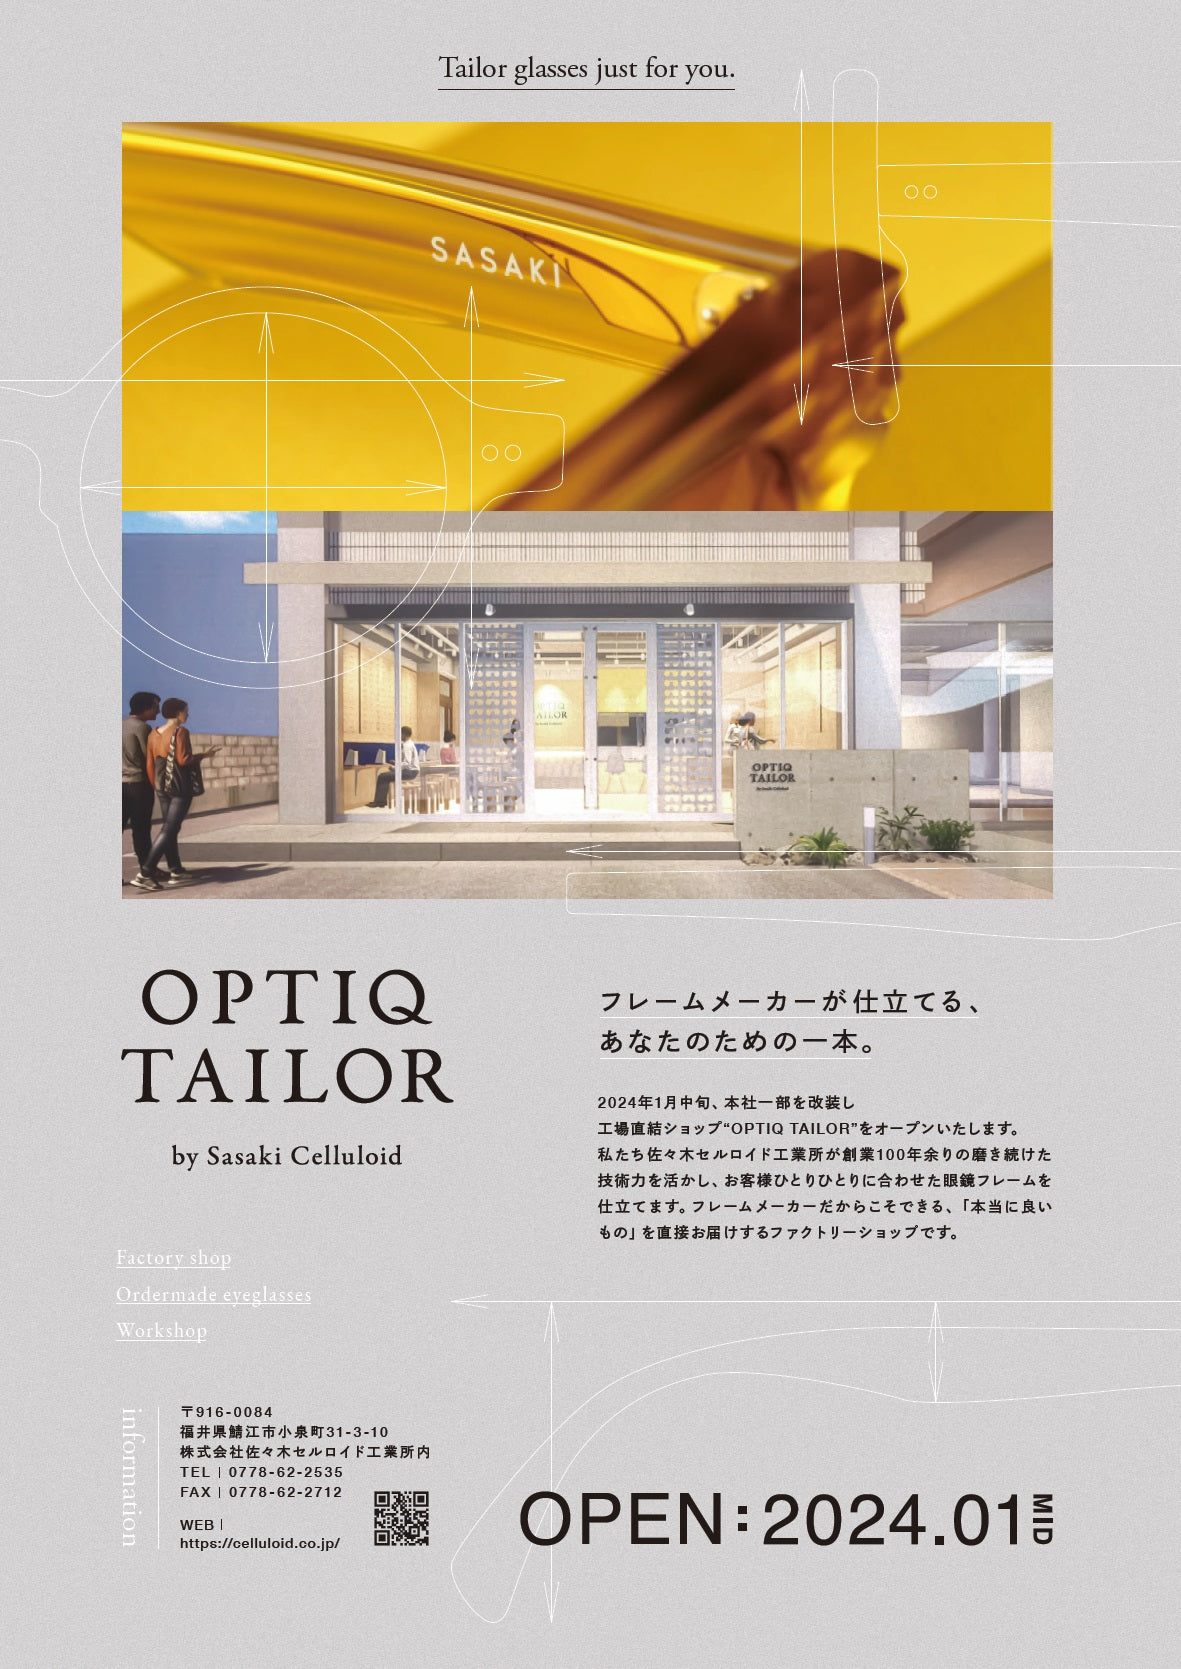 「OPTIQ TAYLOR by Sasaki Celluloid」、じわじわとオープン準備中。